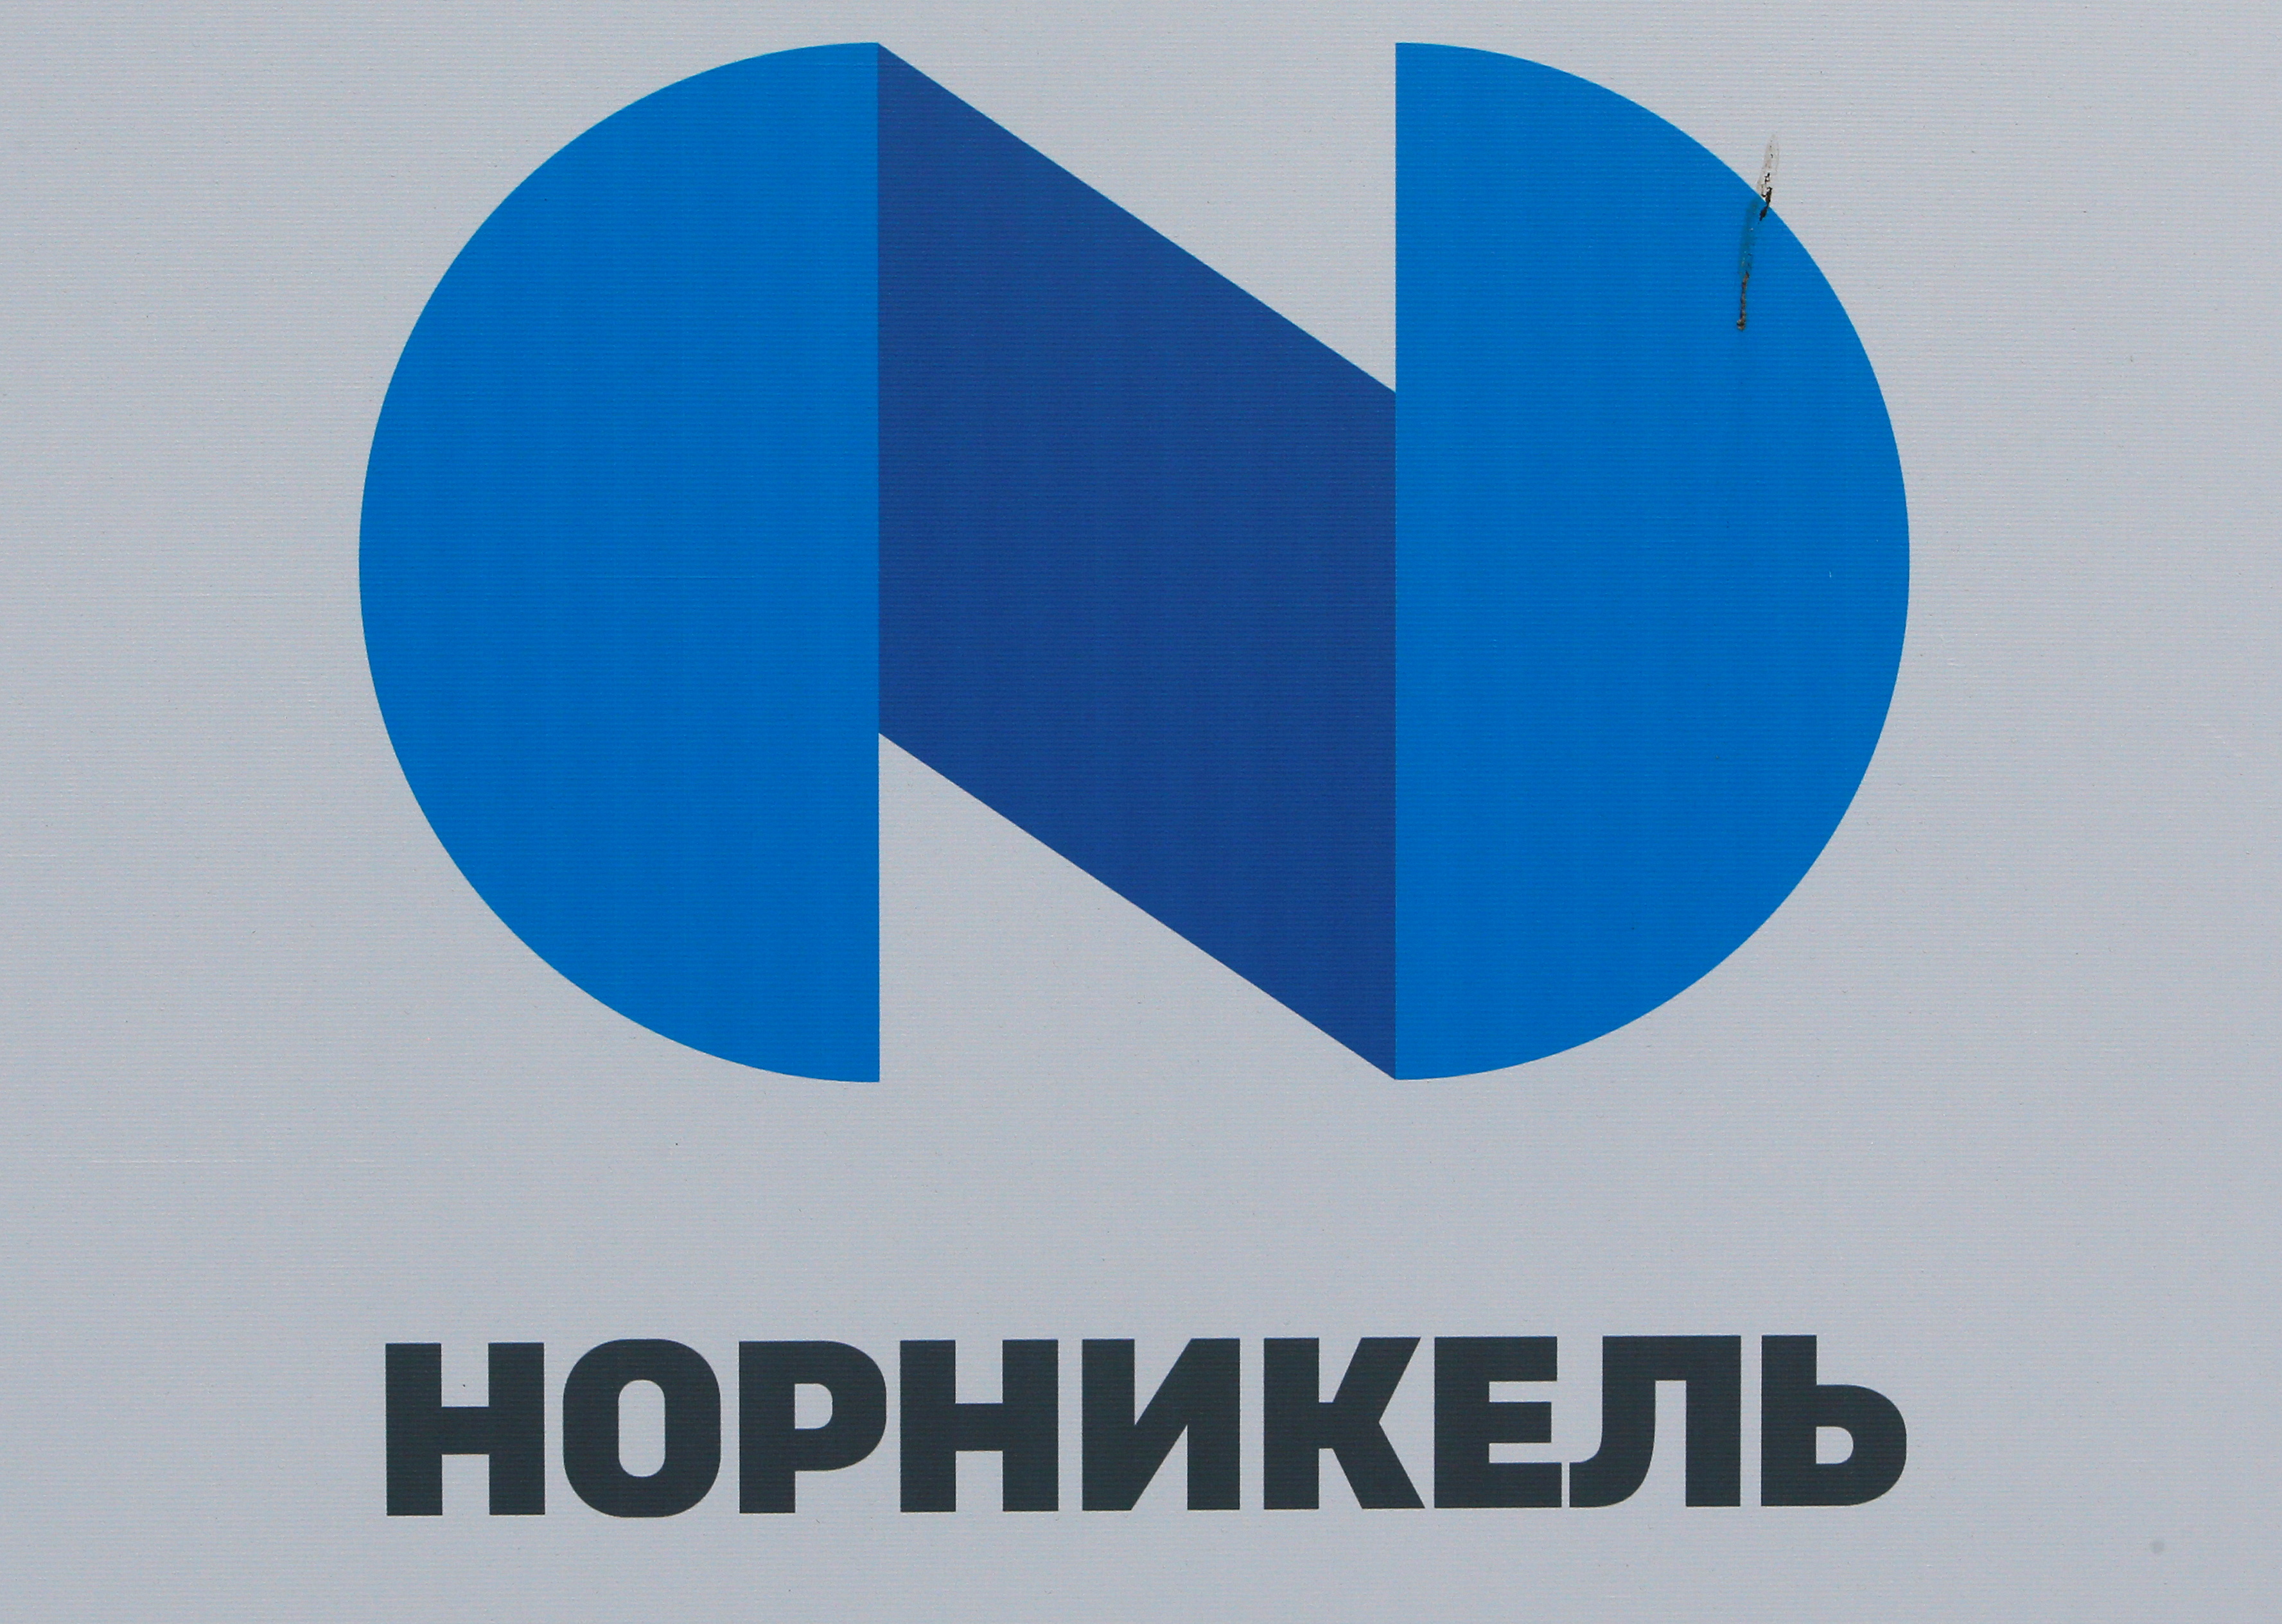 The logo of Russia's miner Norilsk Nickel (Nornickel) is seen on a board at the St. Petersburg International Economic Forum 2017 (SPIEF 2017) in St. Petersburg, Russia, June 1, 2017. Picture taken June 1, 2017. REUTERS/Sergei Karpukhin/File Photo